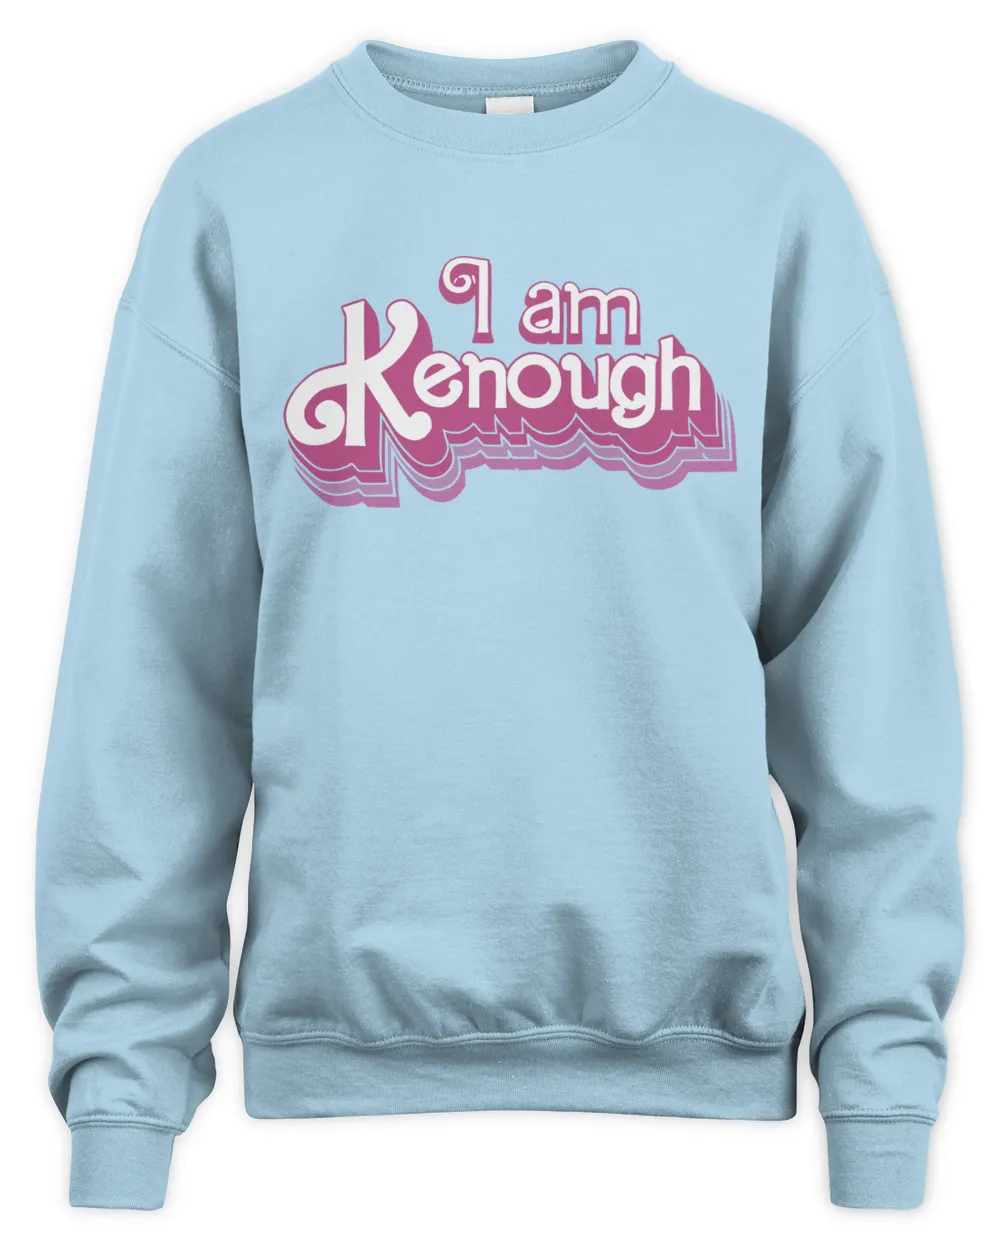 Kenough Sweatshirt, Ken Sweatshirt, Come on Lets Go Party Sweatshirts, I am Kenough, I am Kenough , Birthday Gift